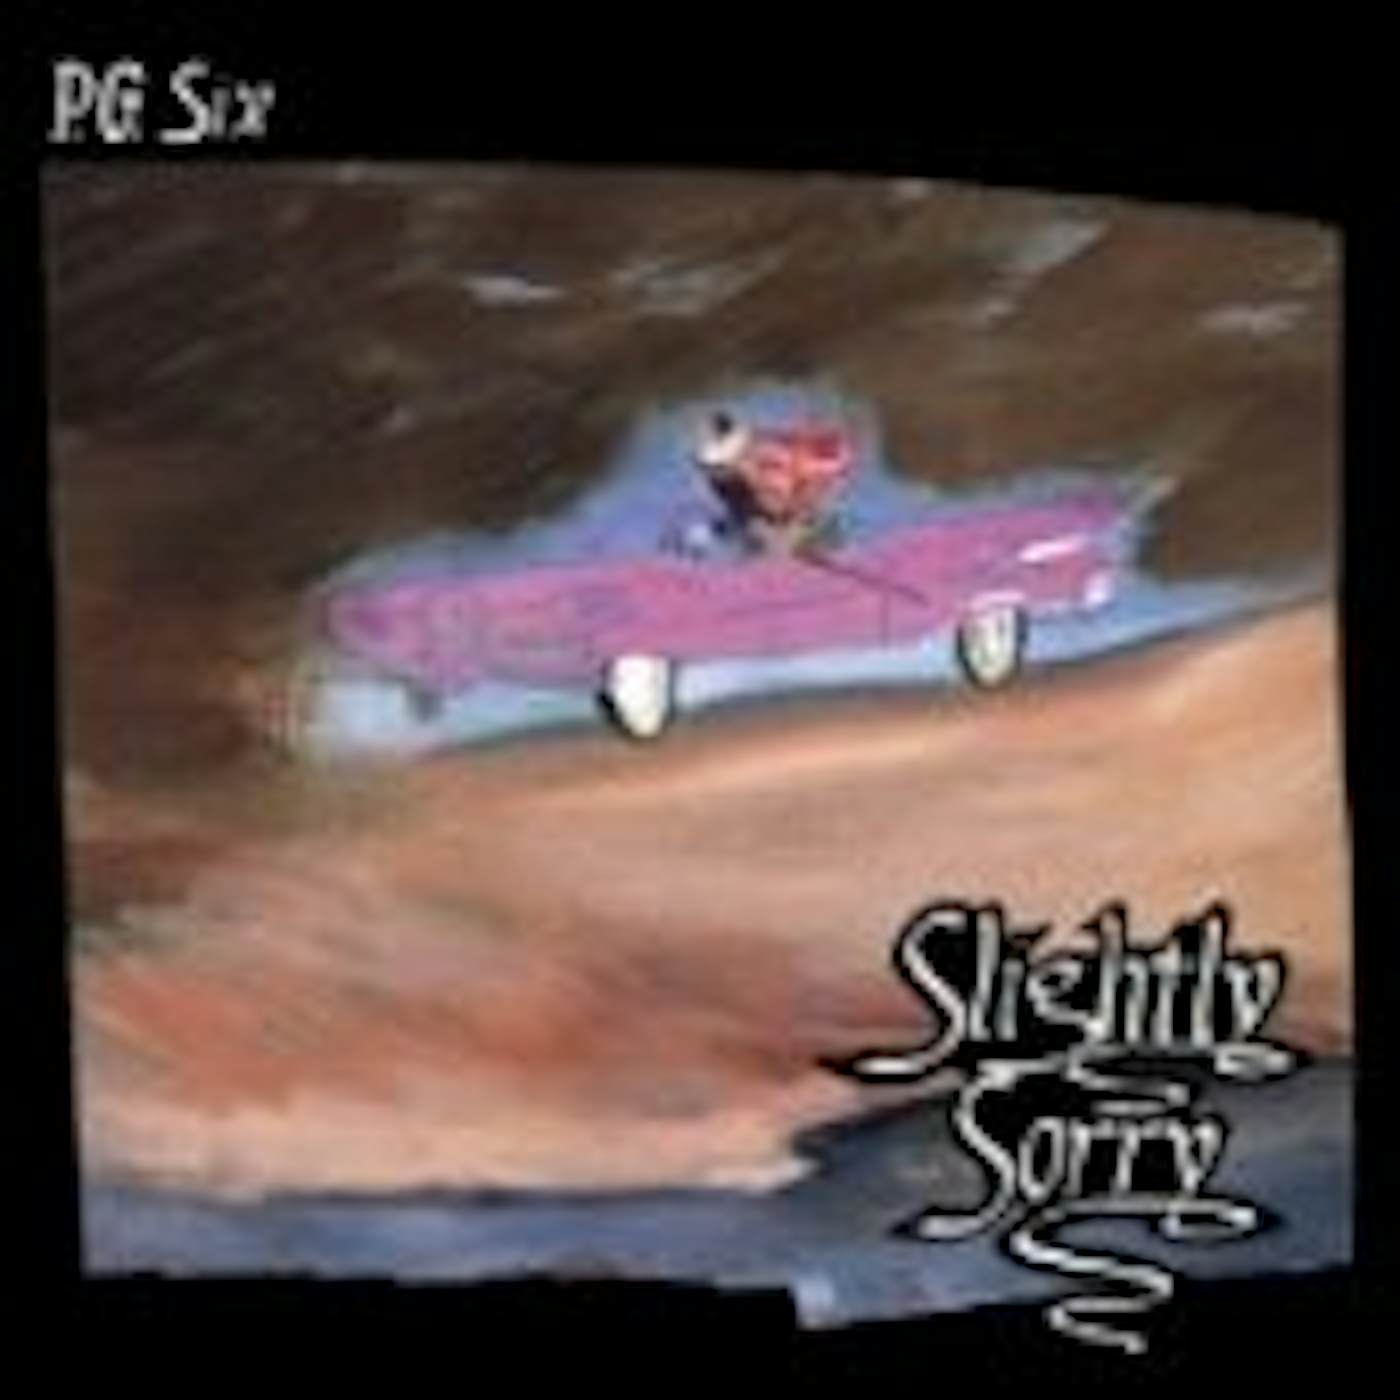 Pg Six SLIGHTLY SORRY Vinyl Record